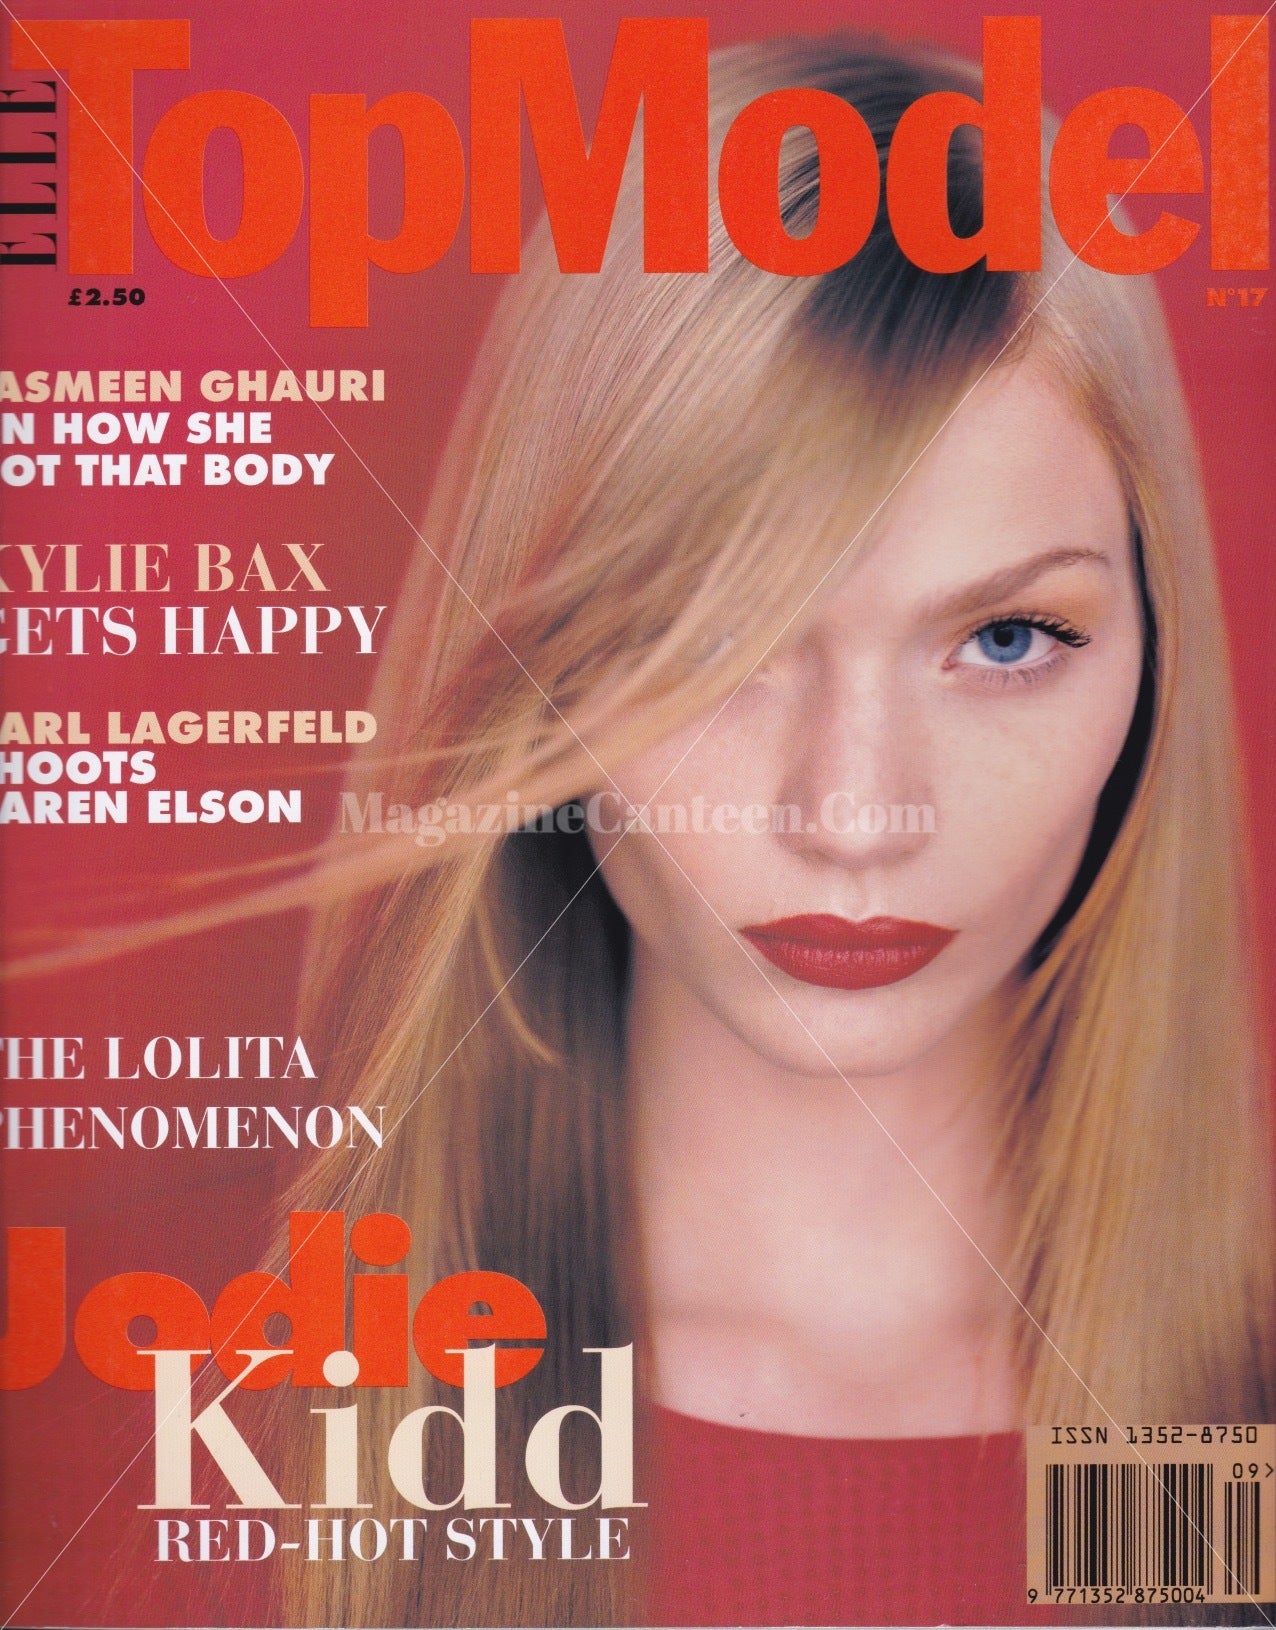 Top Model & Supermodel – magazine canteen